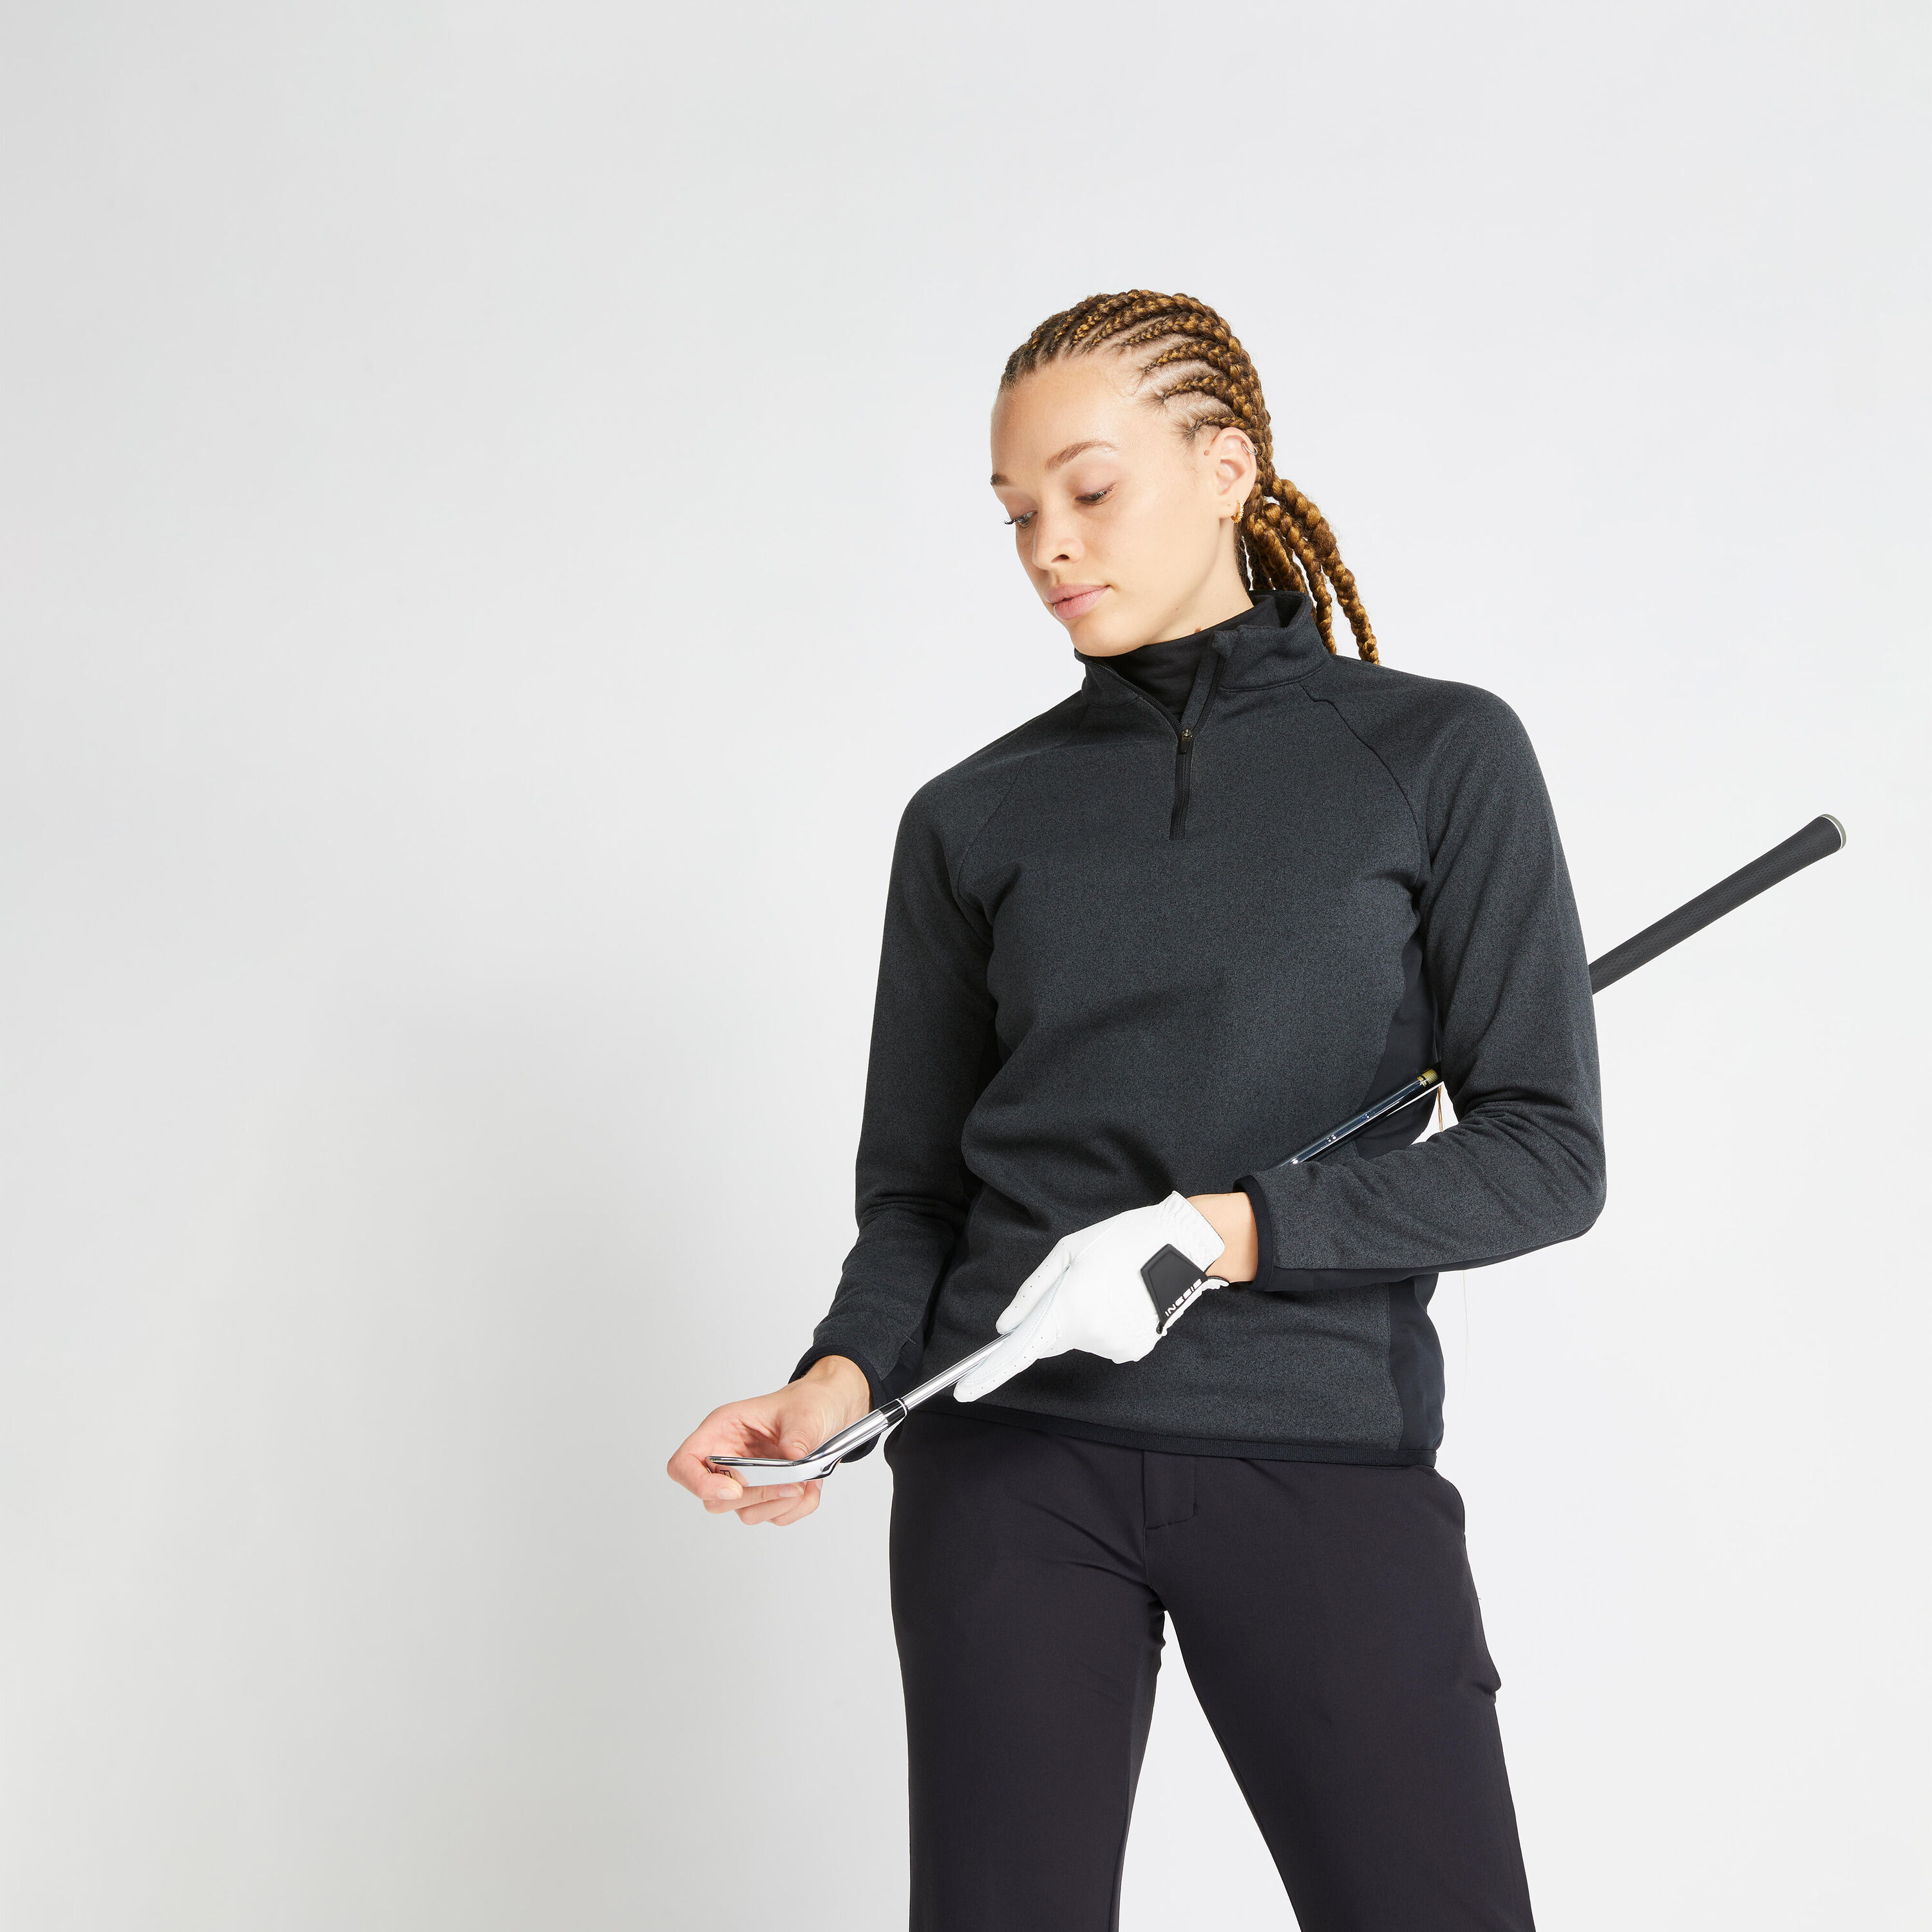 INESIS Women's golf winter fleece pullover CW500 black